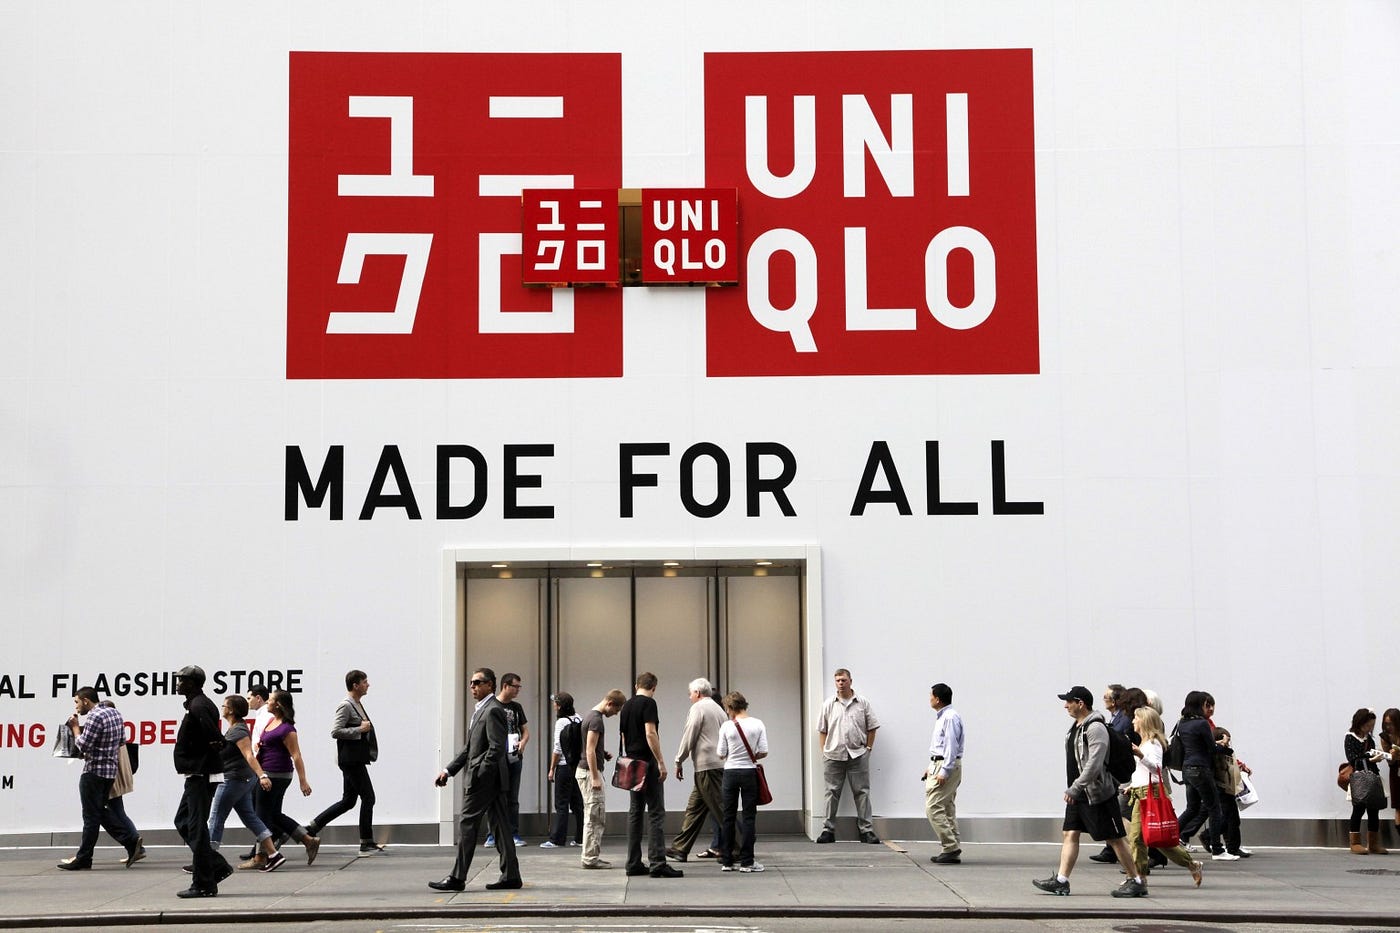 Why UNIQLO failed to dominate US market? | by Avex Li | Medium